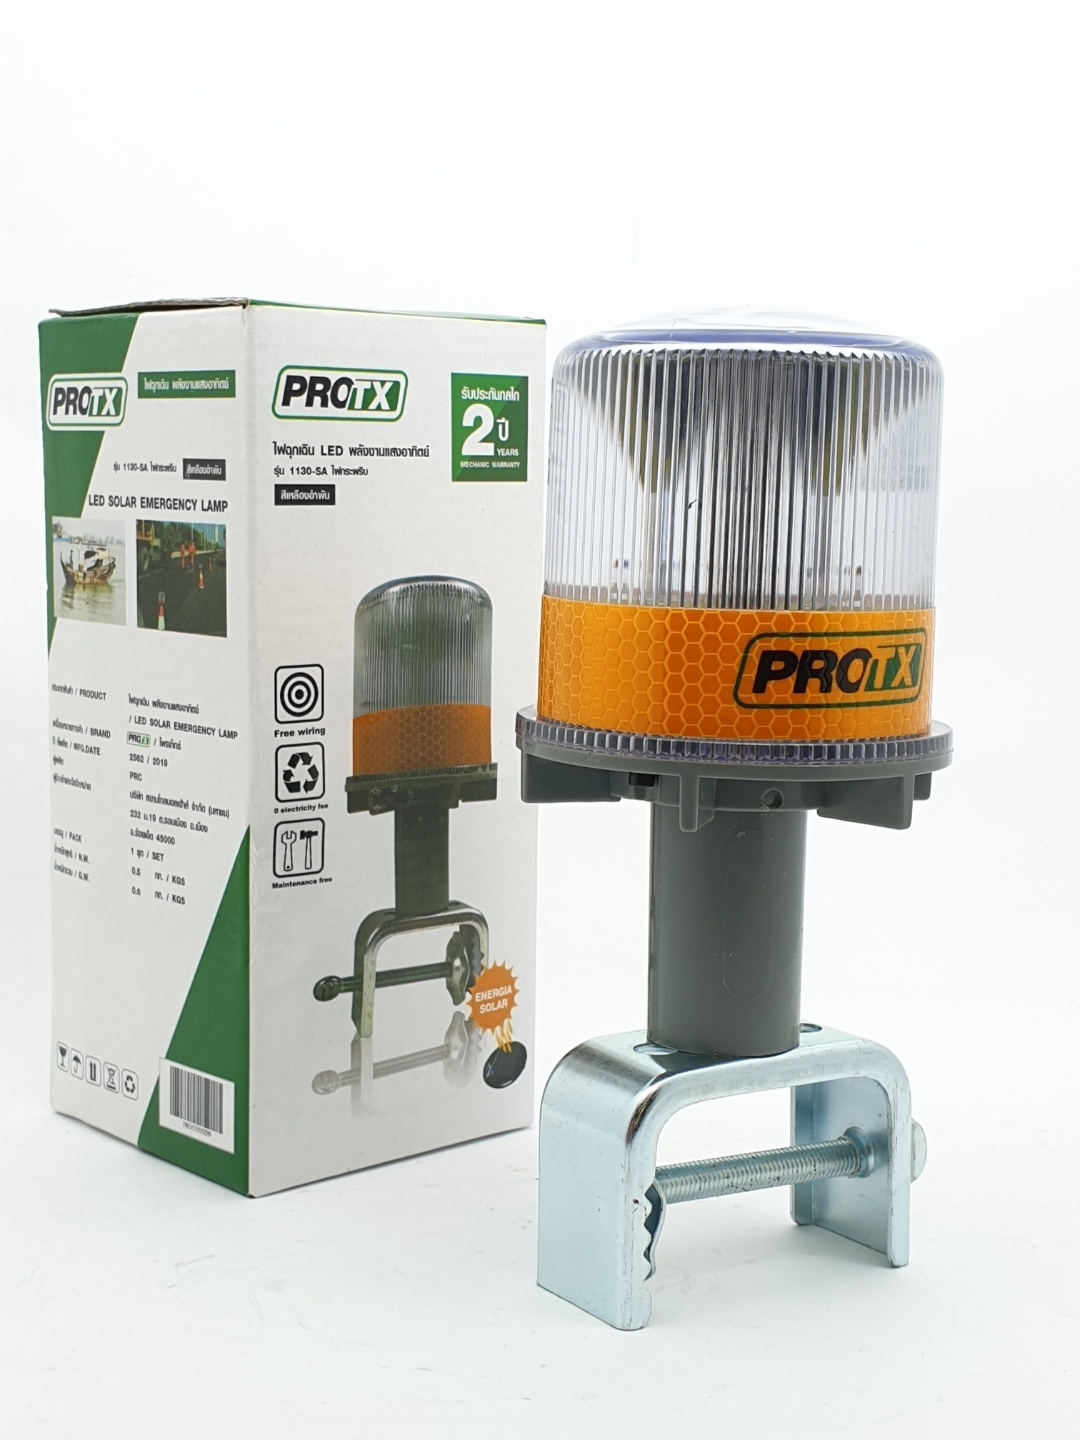 Protx ไฟฉุกเฉิน LED พลังงานแสงอาทิตย์ ไฟกระพริบสีเหลืองอำพัน 1130-SA 